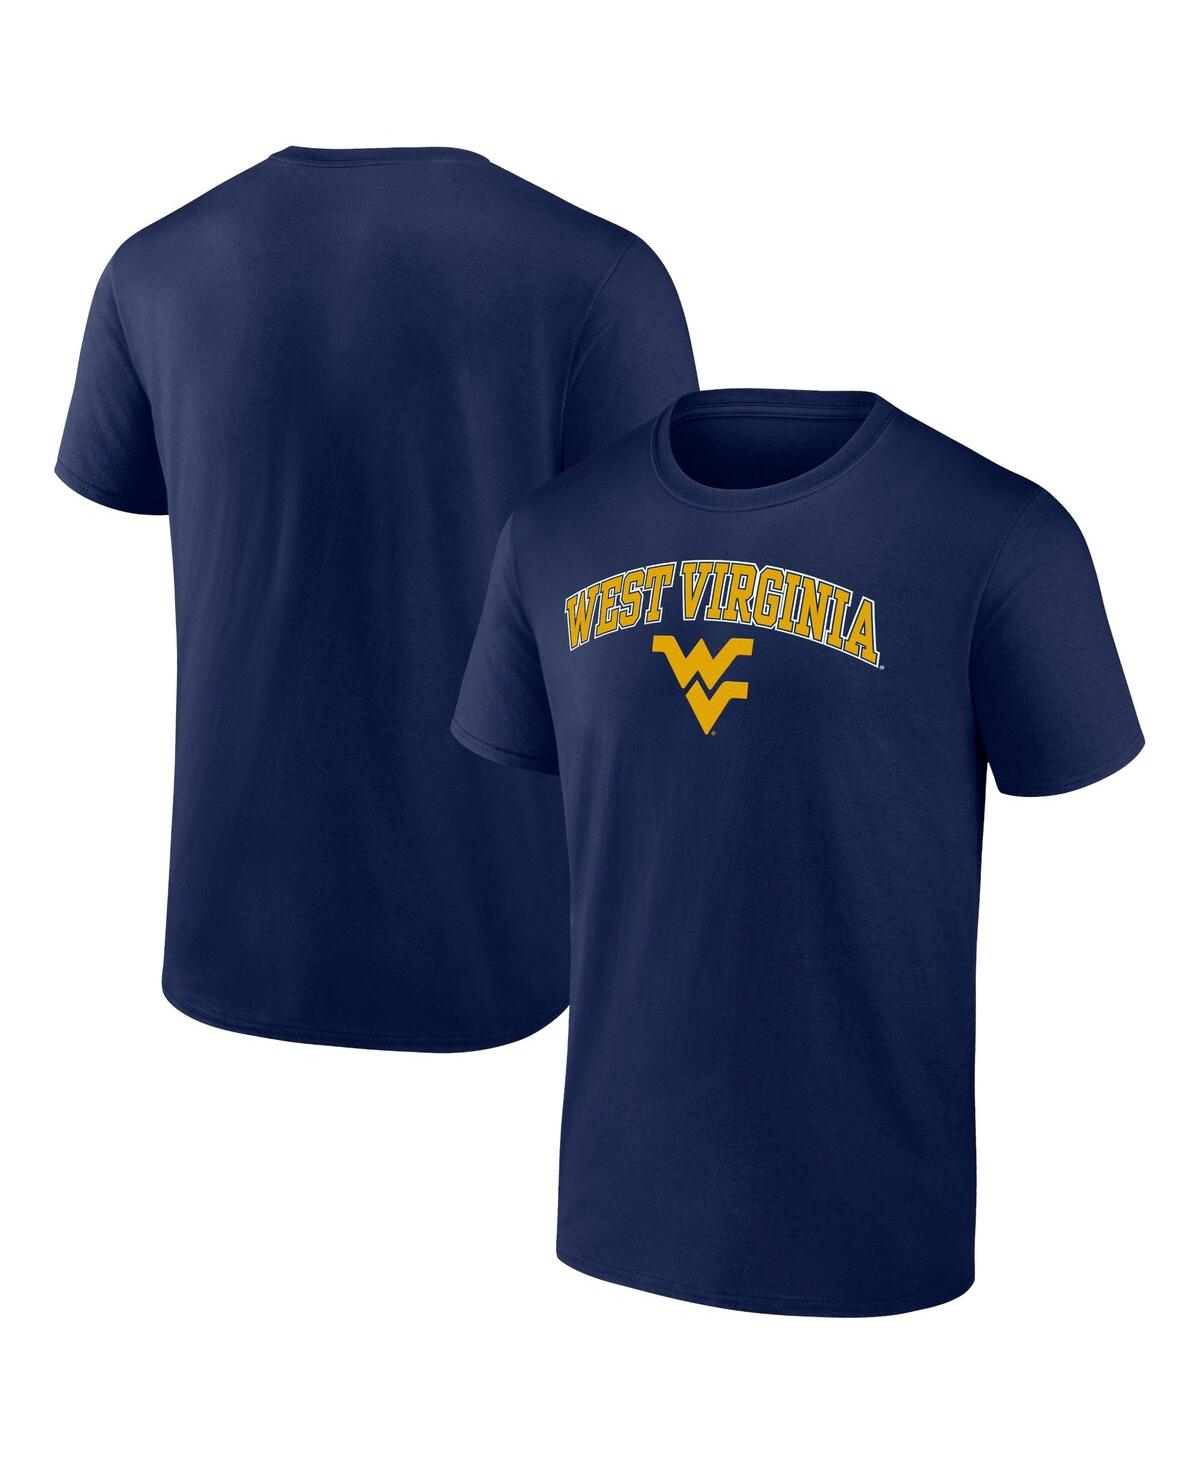 Fanatics Men's  Navy West Virginia Mountaineers Campus T-shirt